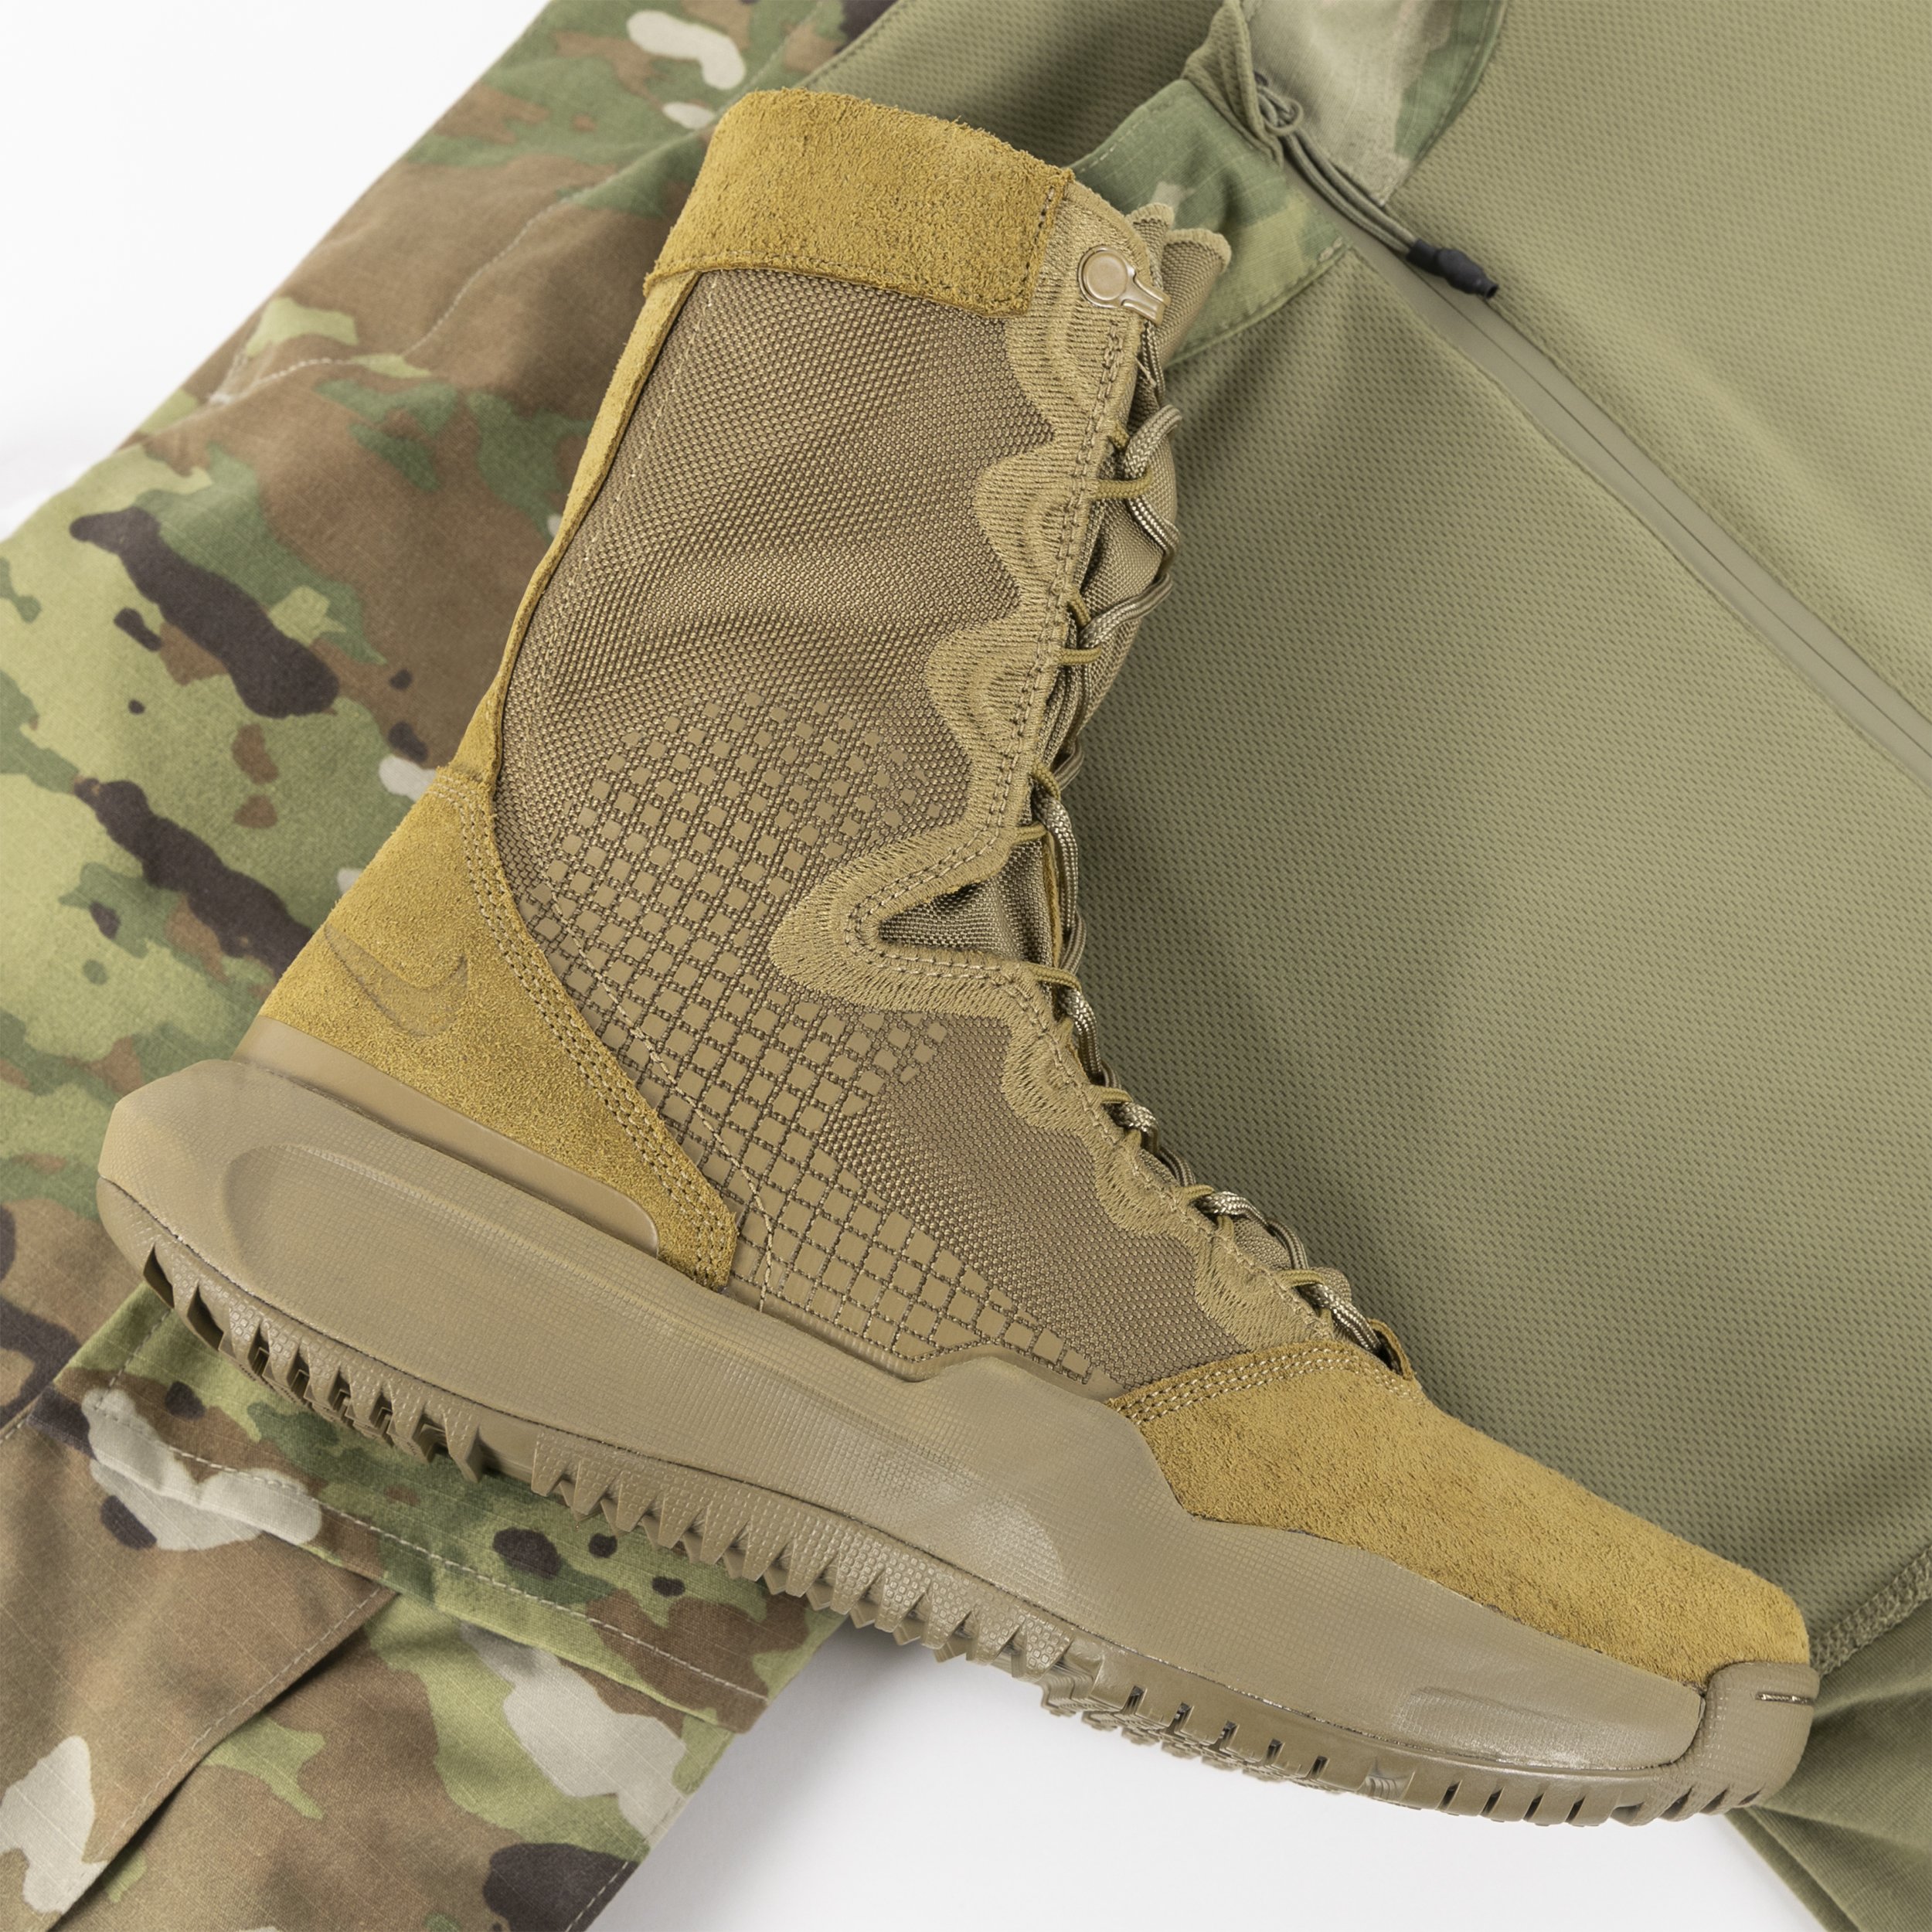 Nike SFB B1 Tactical Boot.